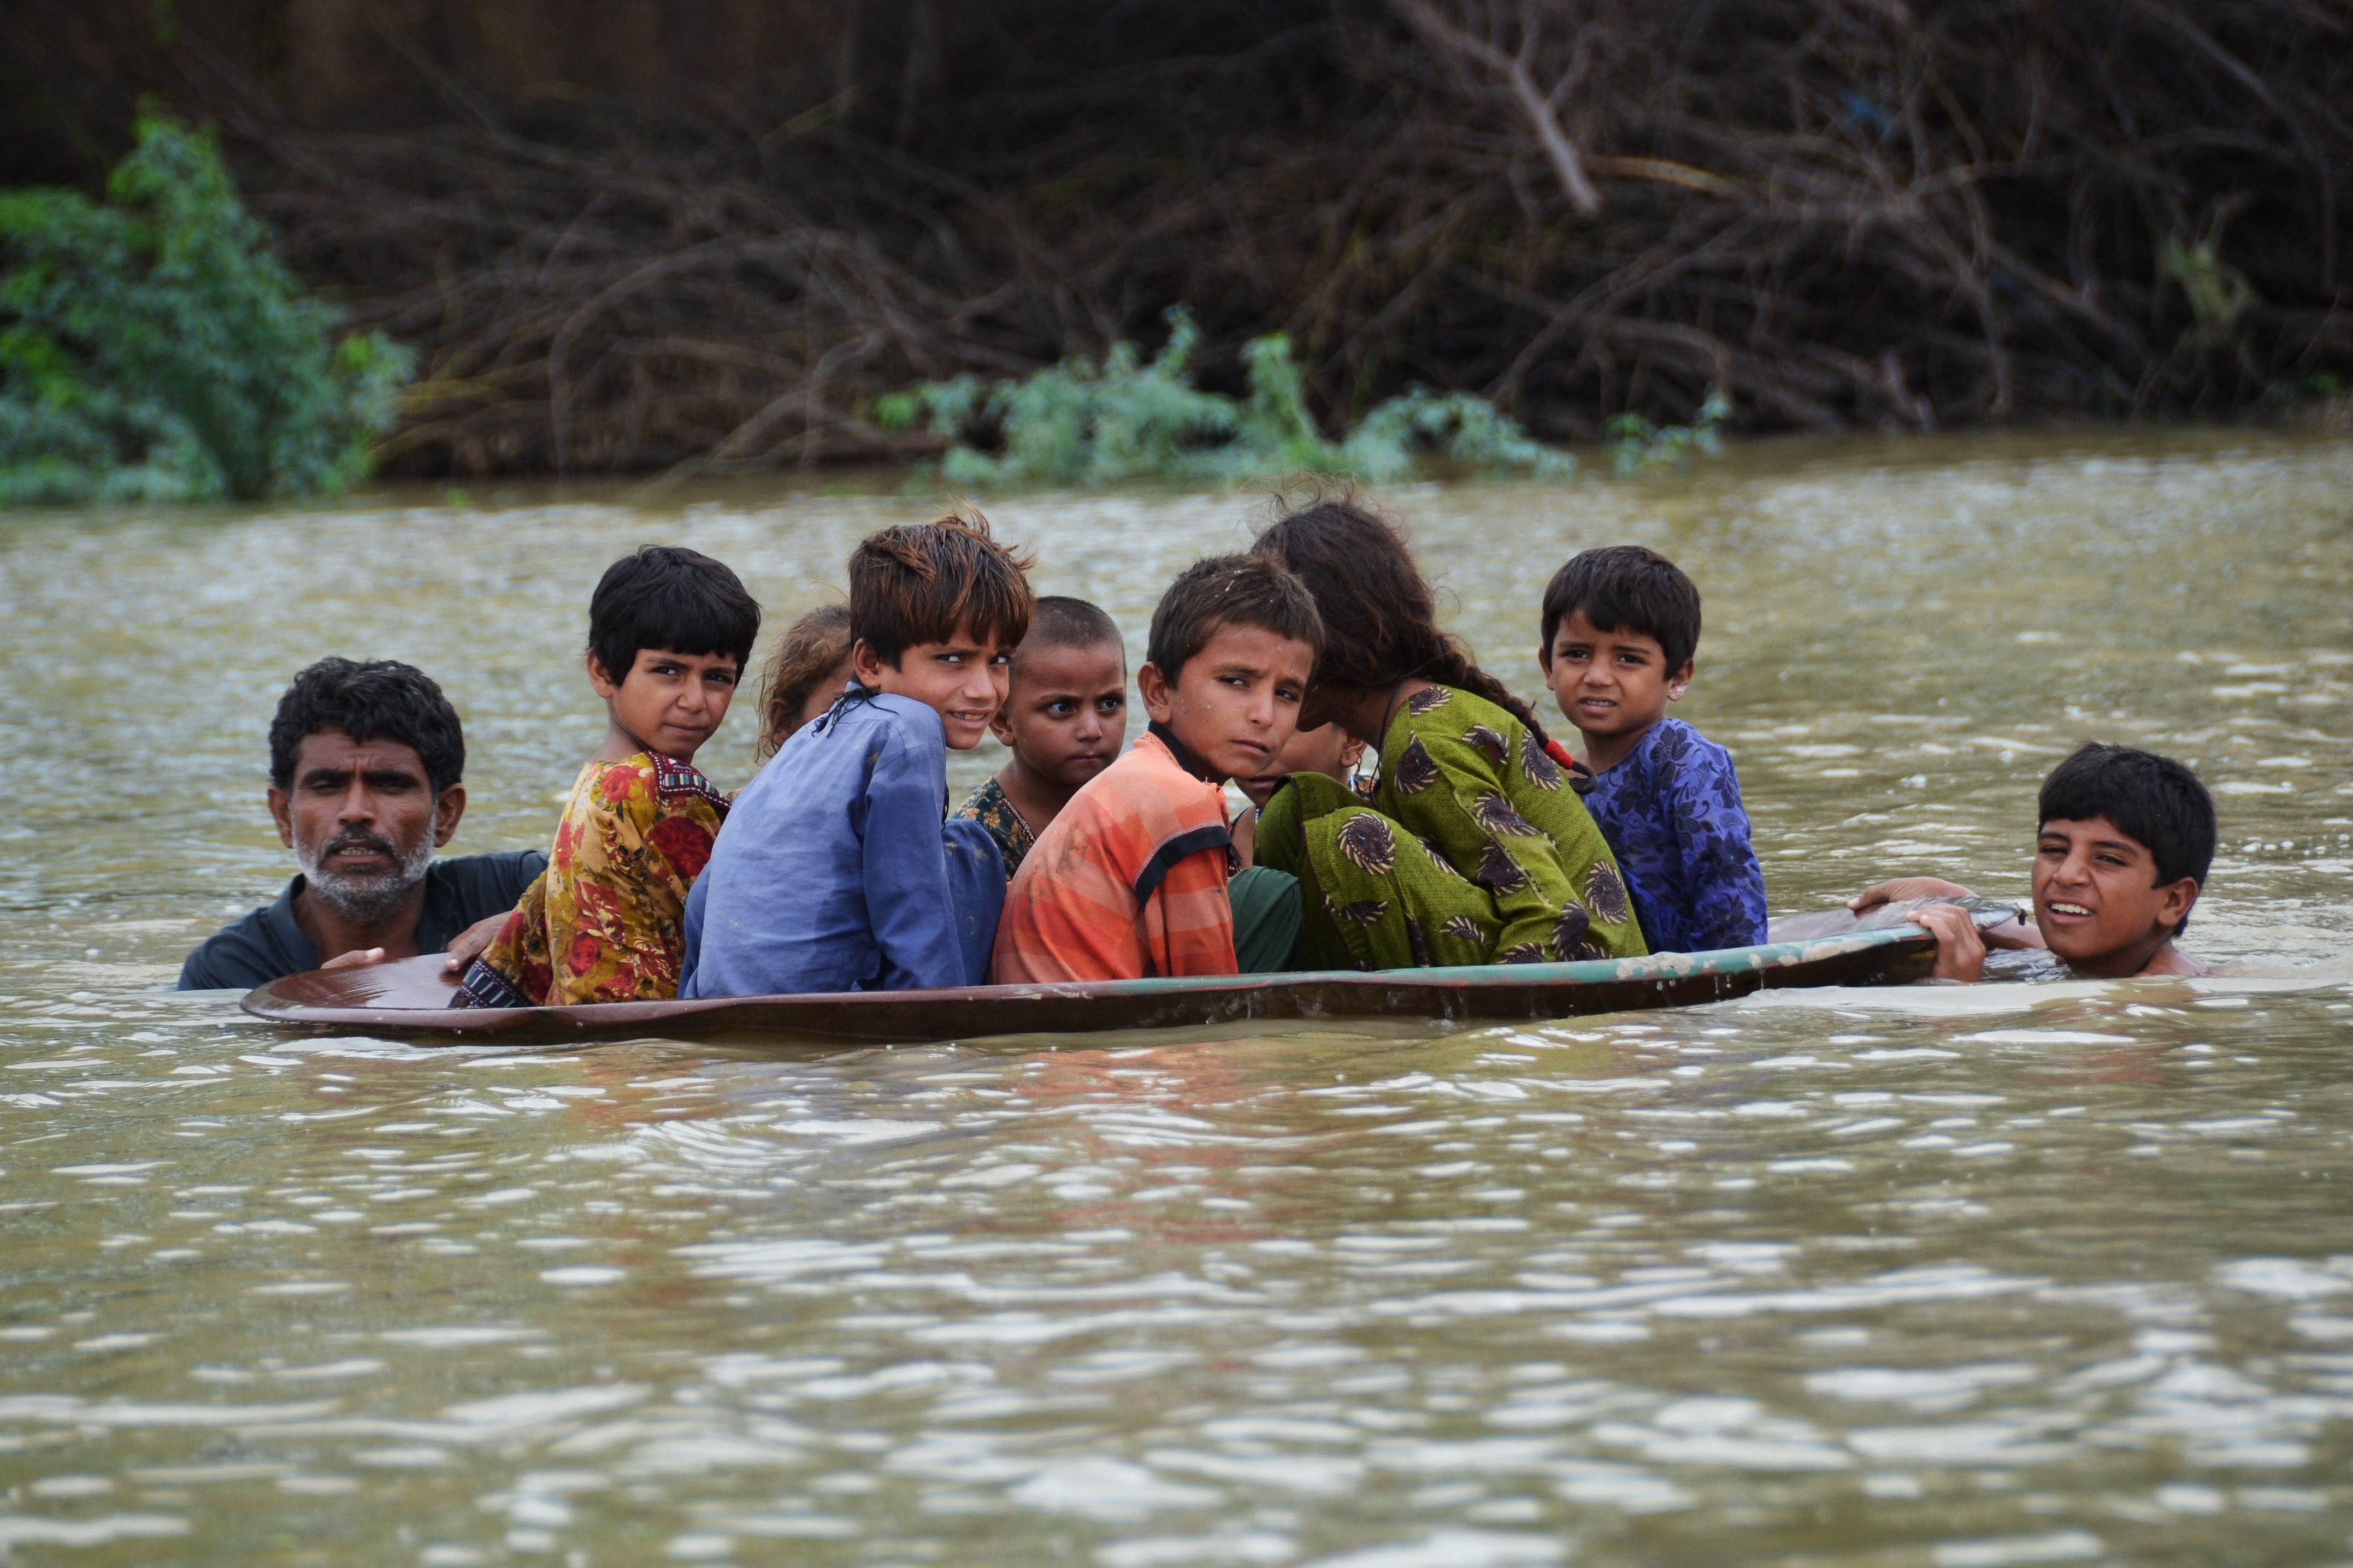 Last summer, a third of Pakistan was under water